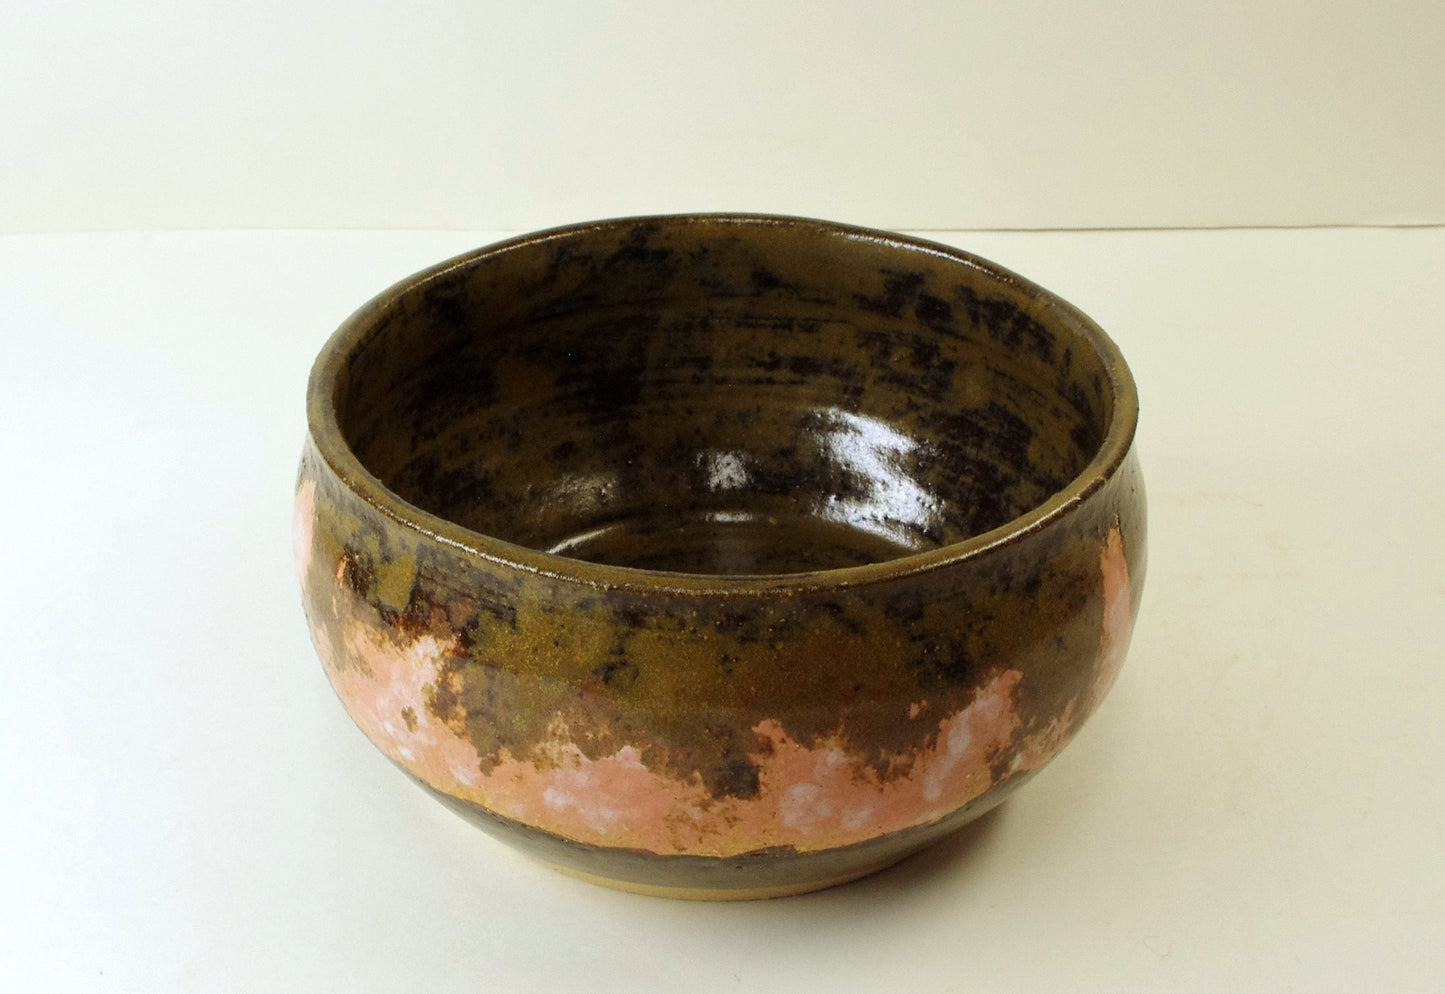 2118, Hand Thrown Stoneware Ikebana Vase, 6 x 3 inches, Brown, Pink